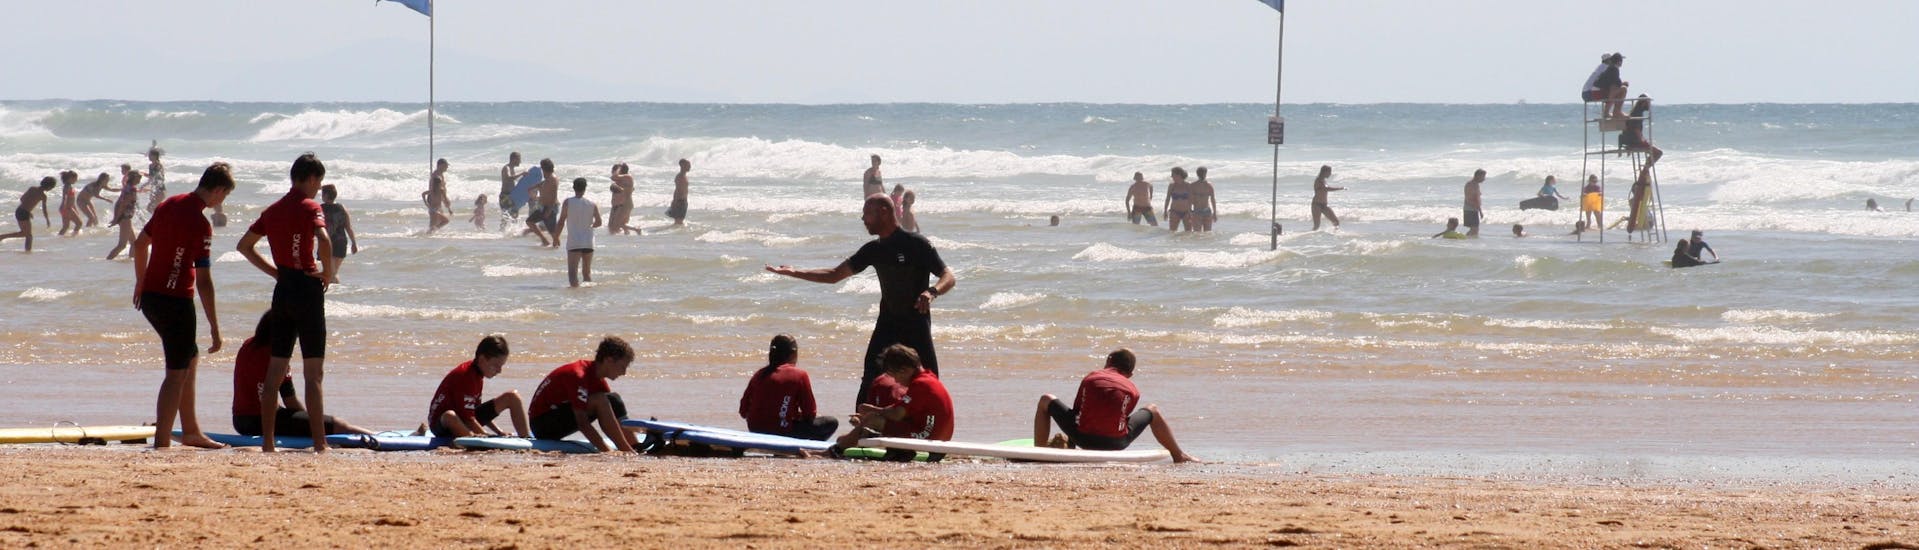 Una surfista sfida le onde facendo surf presso Vieux Boucau.